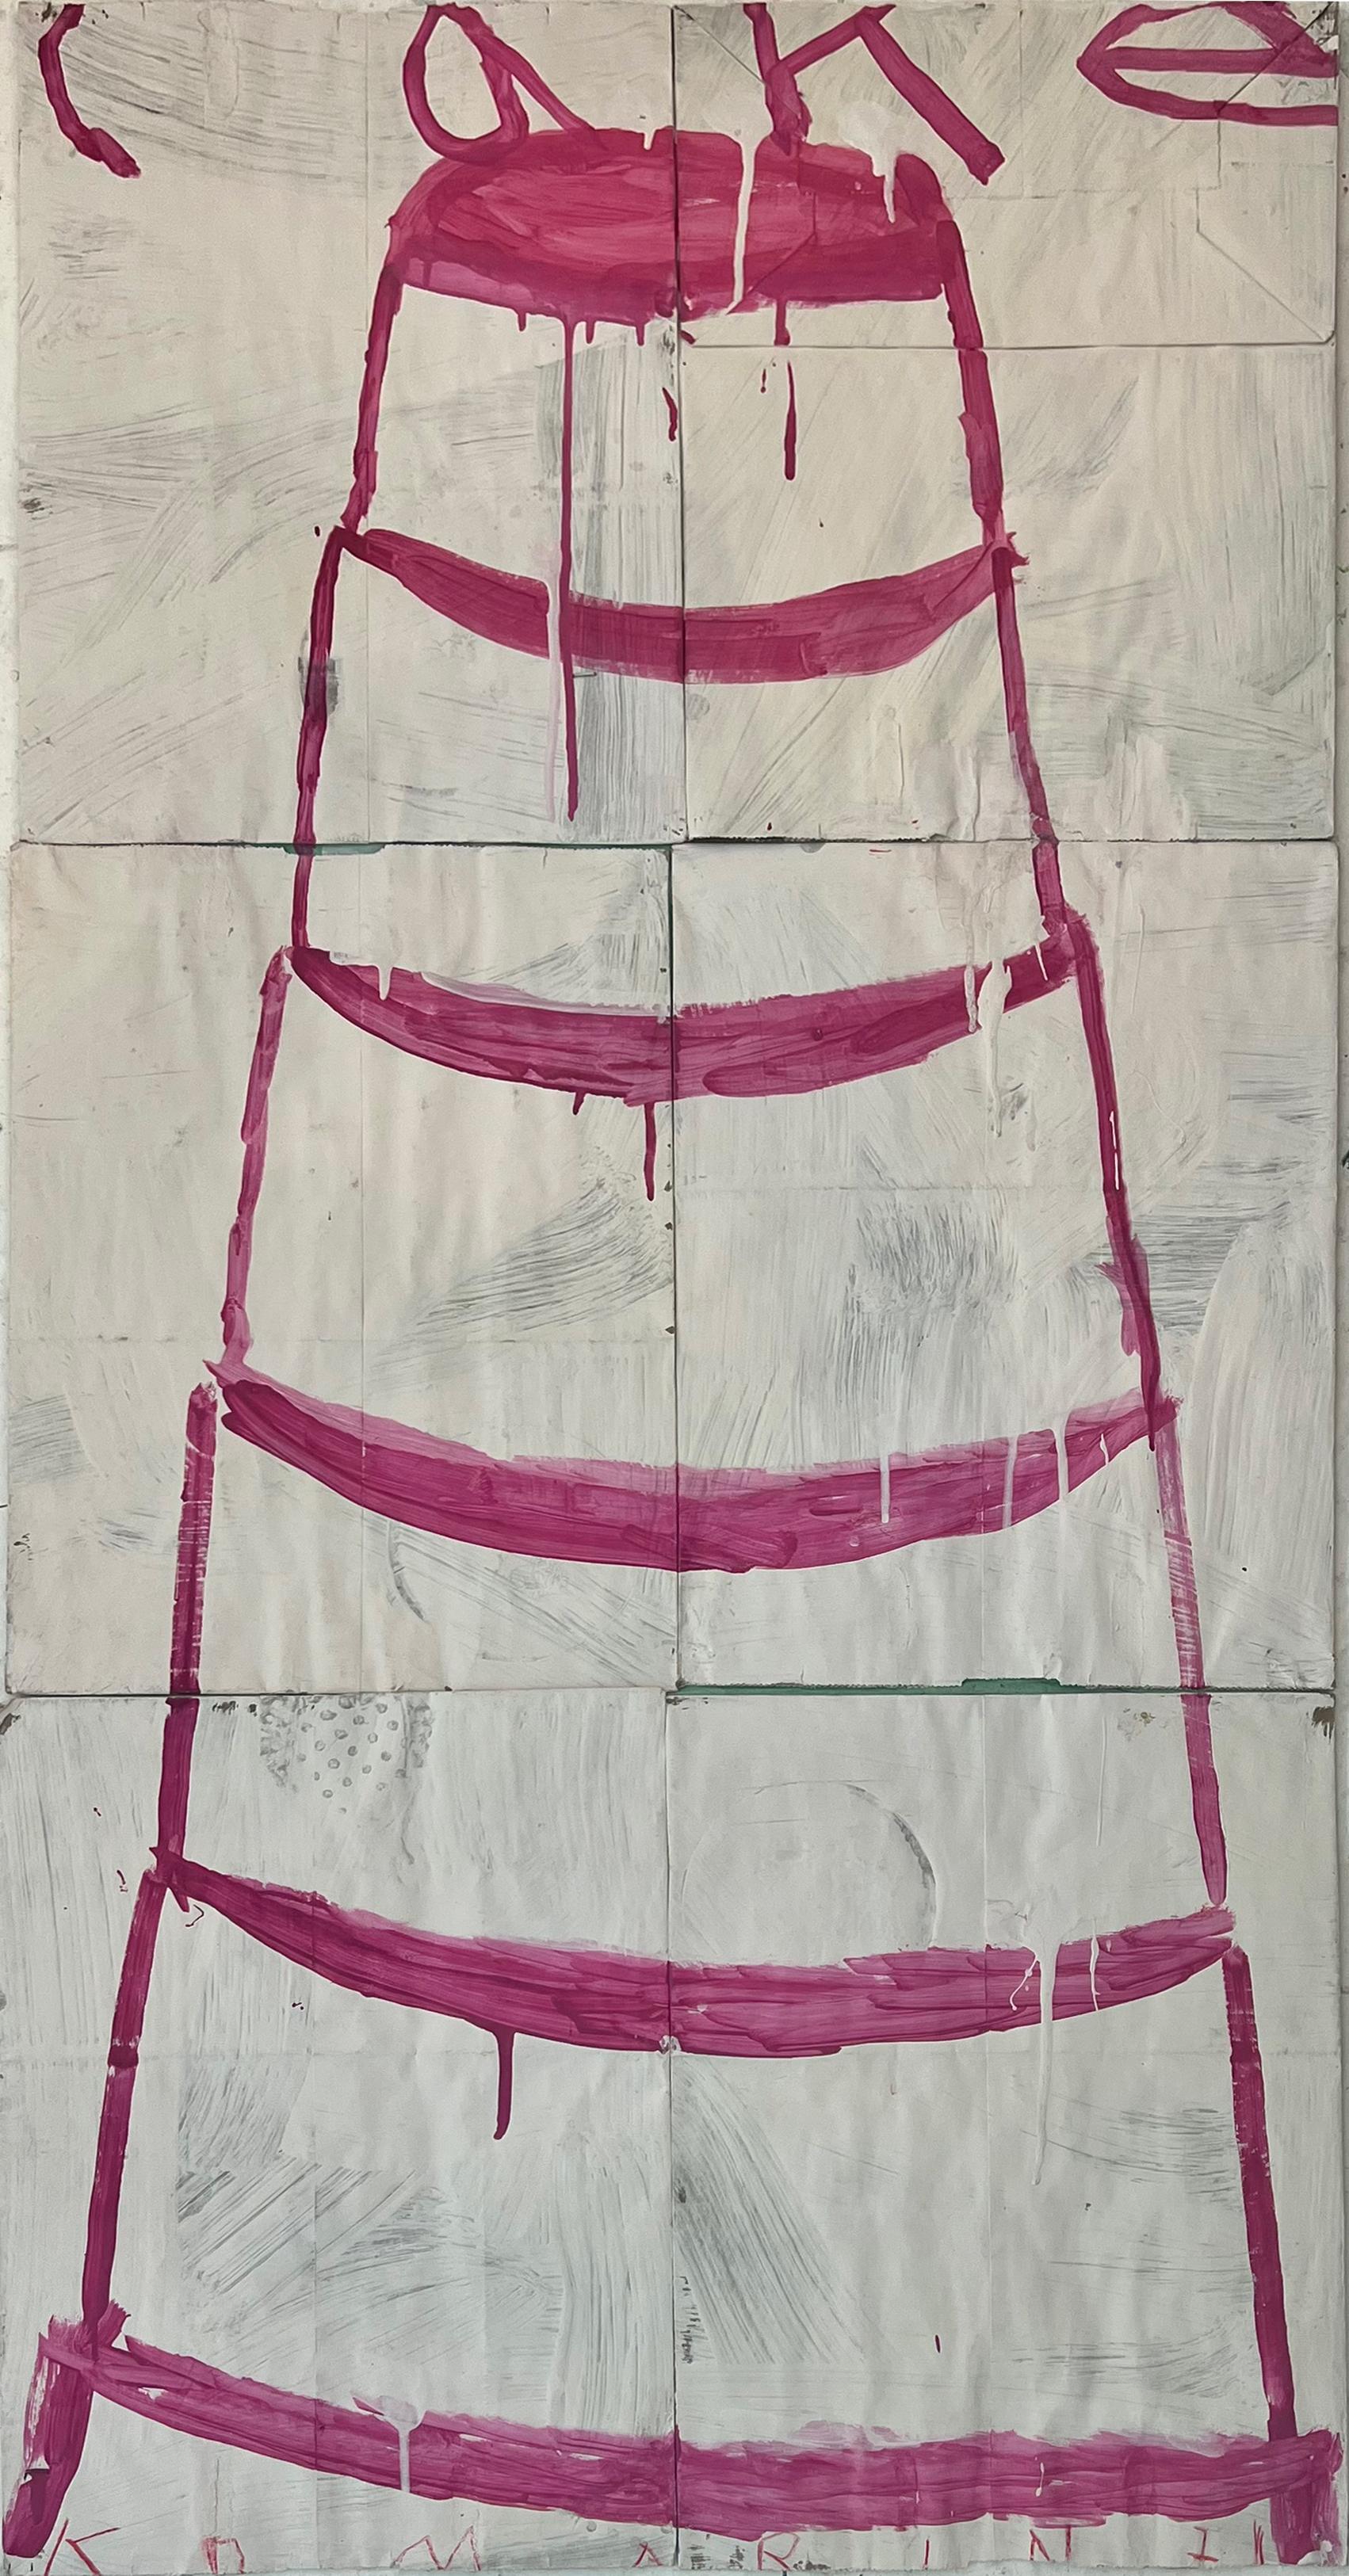 Gary Komarin Still-Life Painting – Stacked Cakes, Rosa auf Weiß